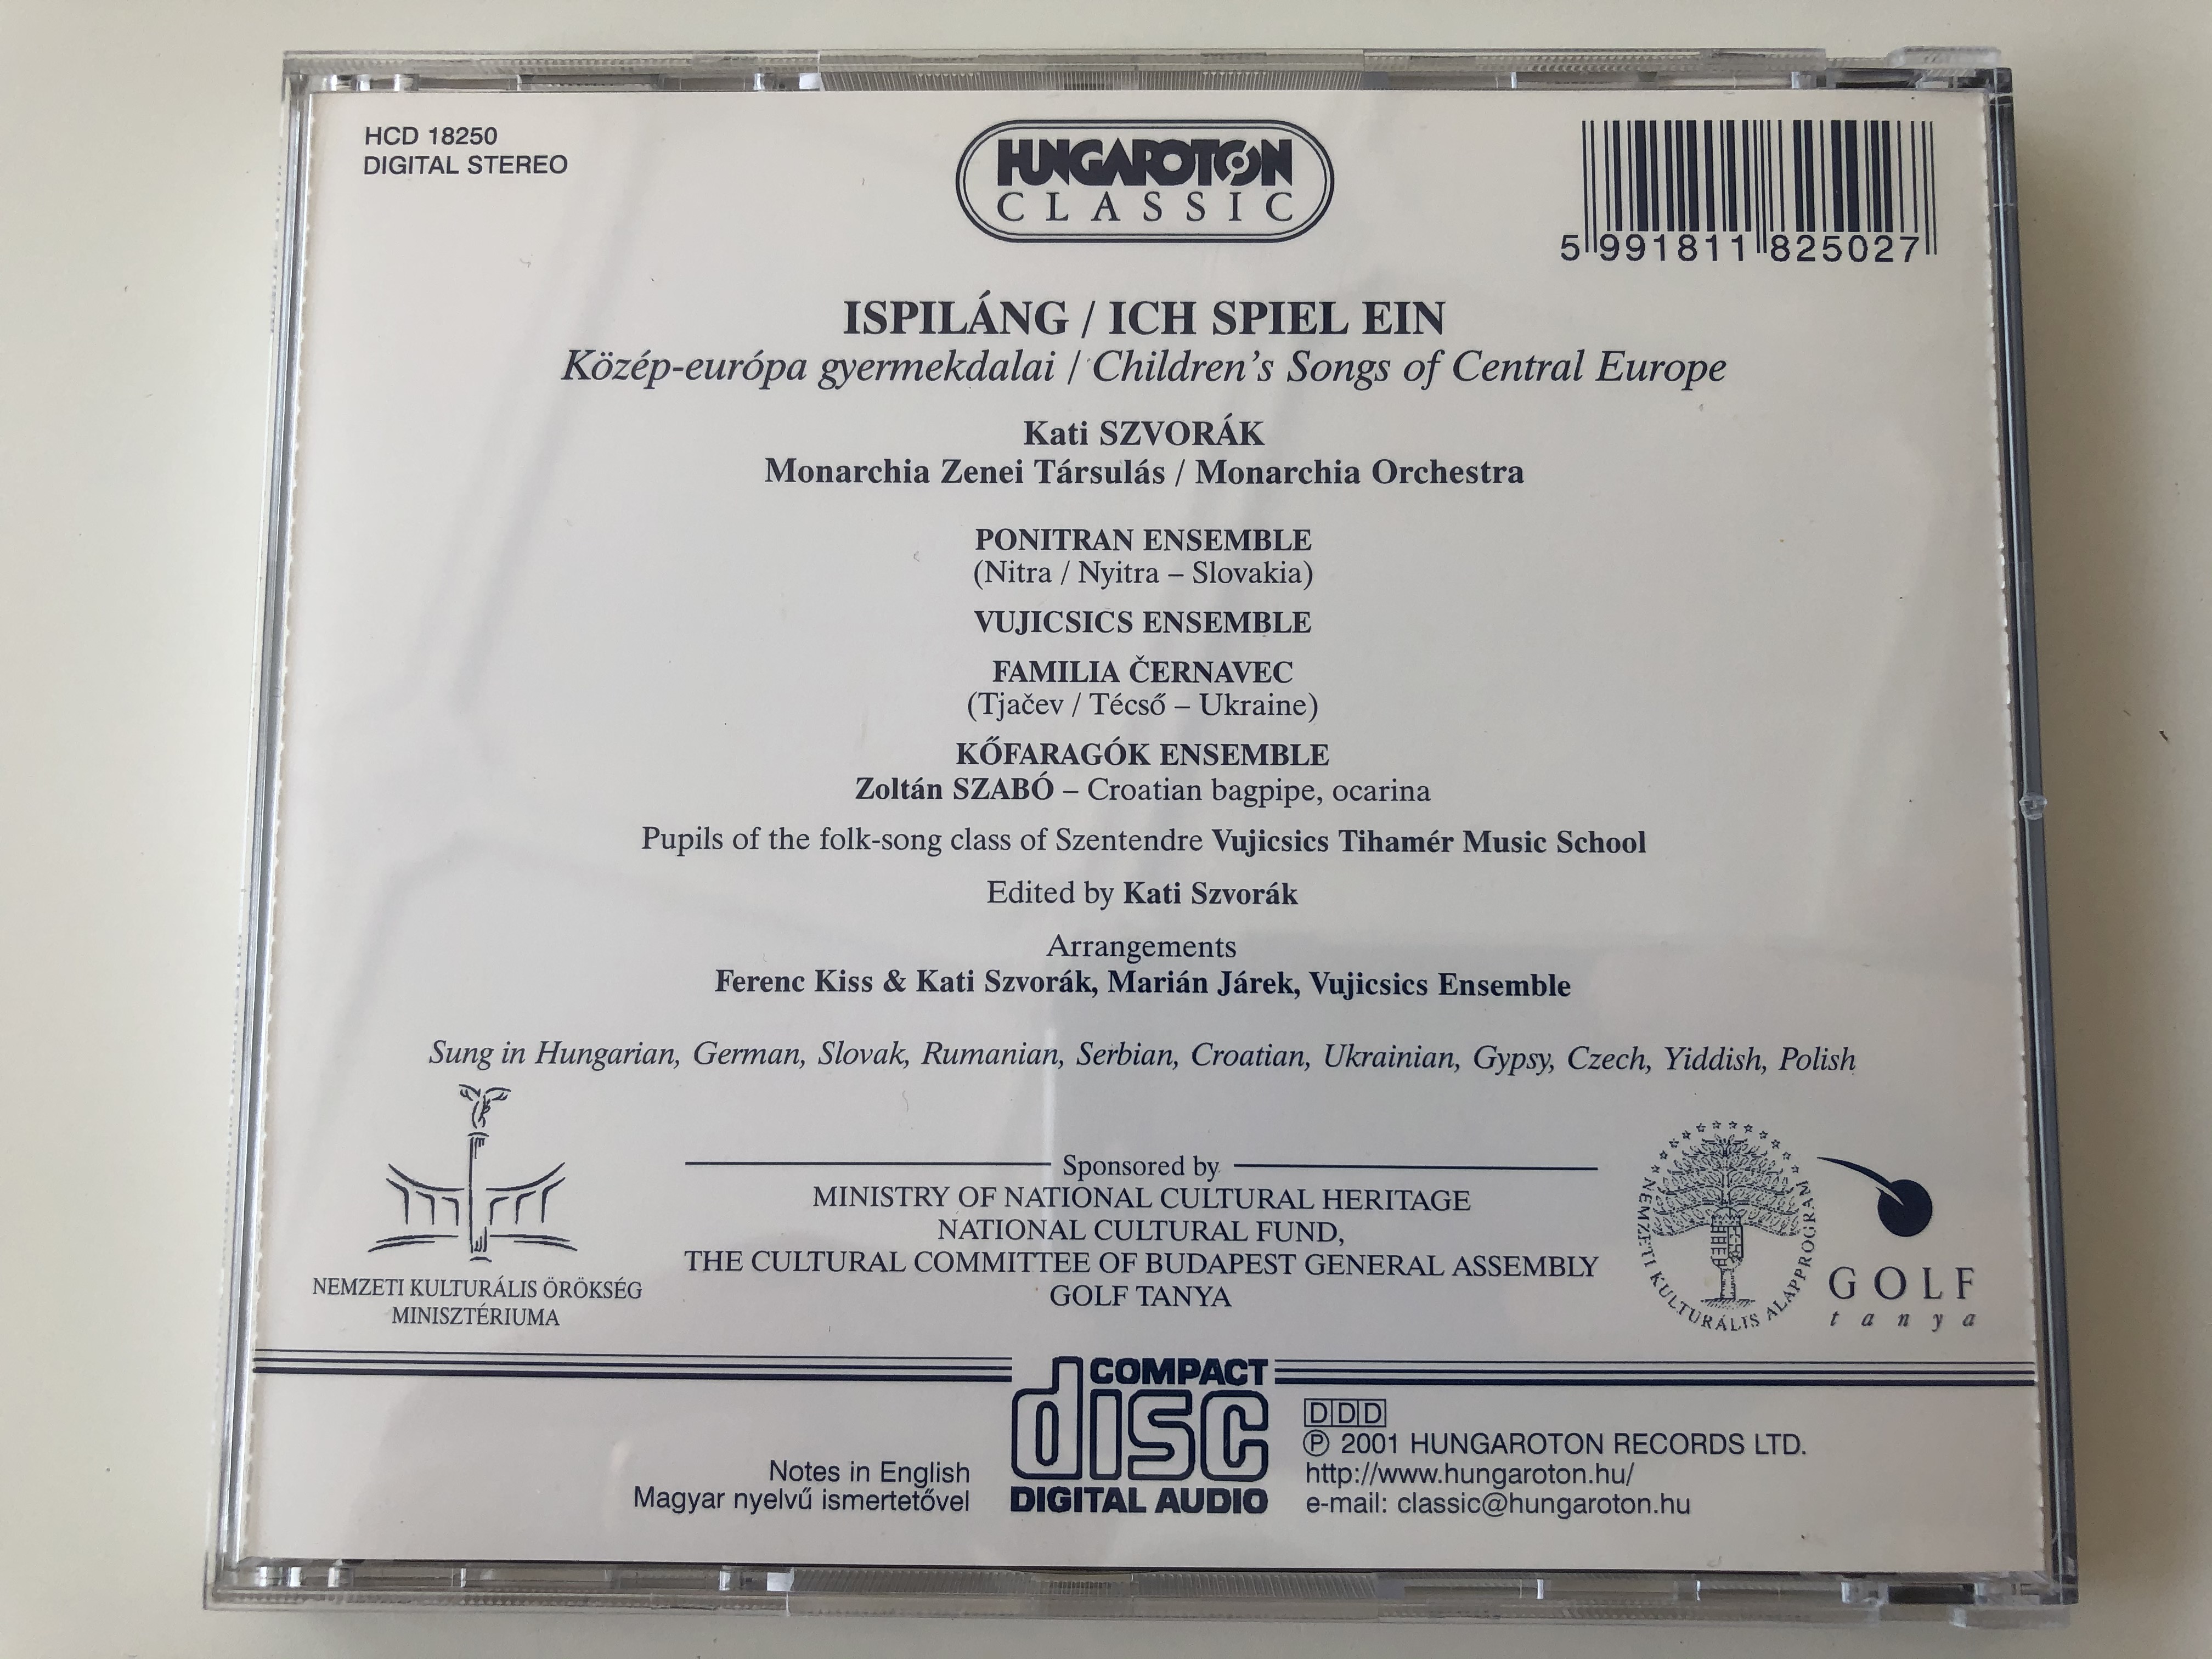 ich-spiele-ein-ispil-ng-kati-szvor-k-monarchia-k-z-p-eur-pa-gyermekdalai-children-s-songs-of-central-europe-hungaroton-classic-audio-cd-2001-stereo-hcd-18250-7-.jpg